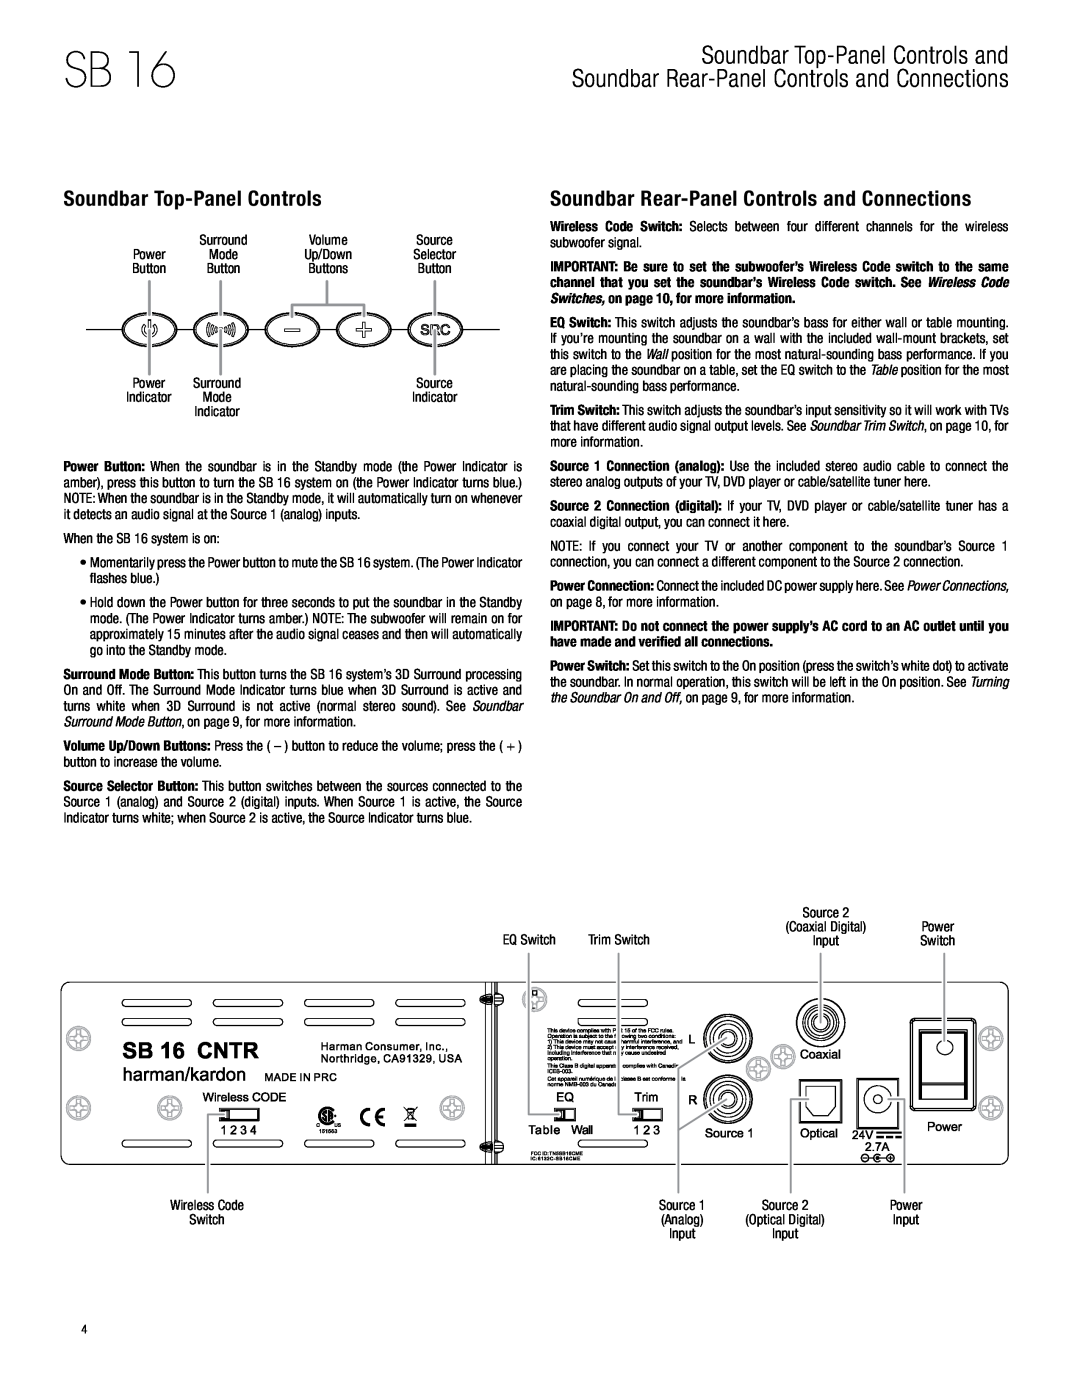 Harman-Kardon SB 16 owner manual Soundbar Top-Panel Controls, Soundbar Rear-Panel Controls and Connections 